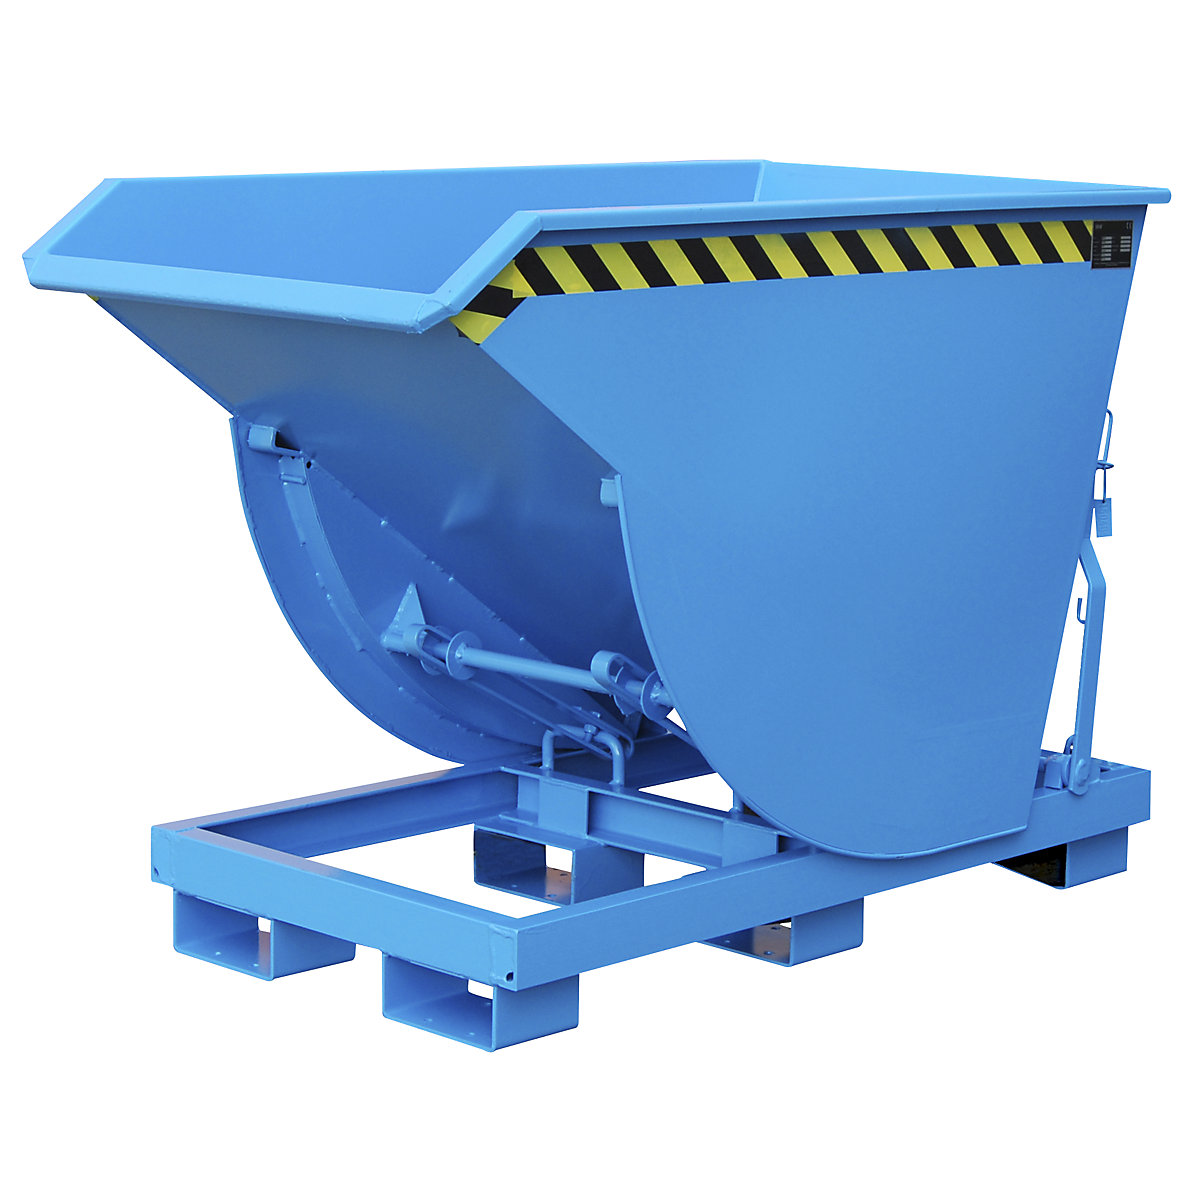 Recipiente basculante, versão estreita – eurokraft pro, volume 0,5 m³, capacidade de carga 2500 kg, azul claro RAL 5012-9